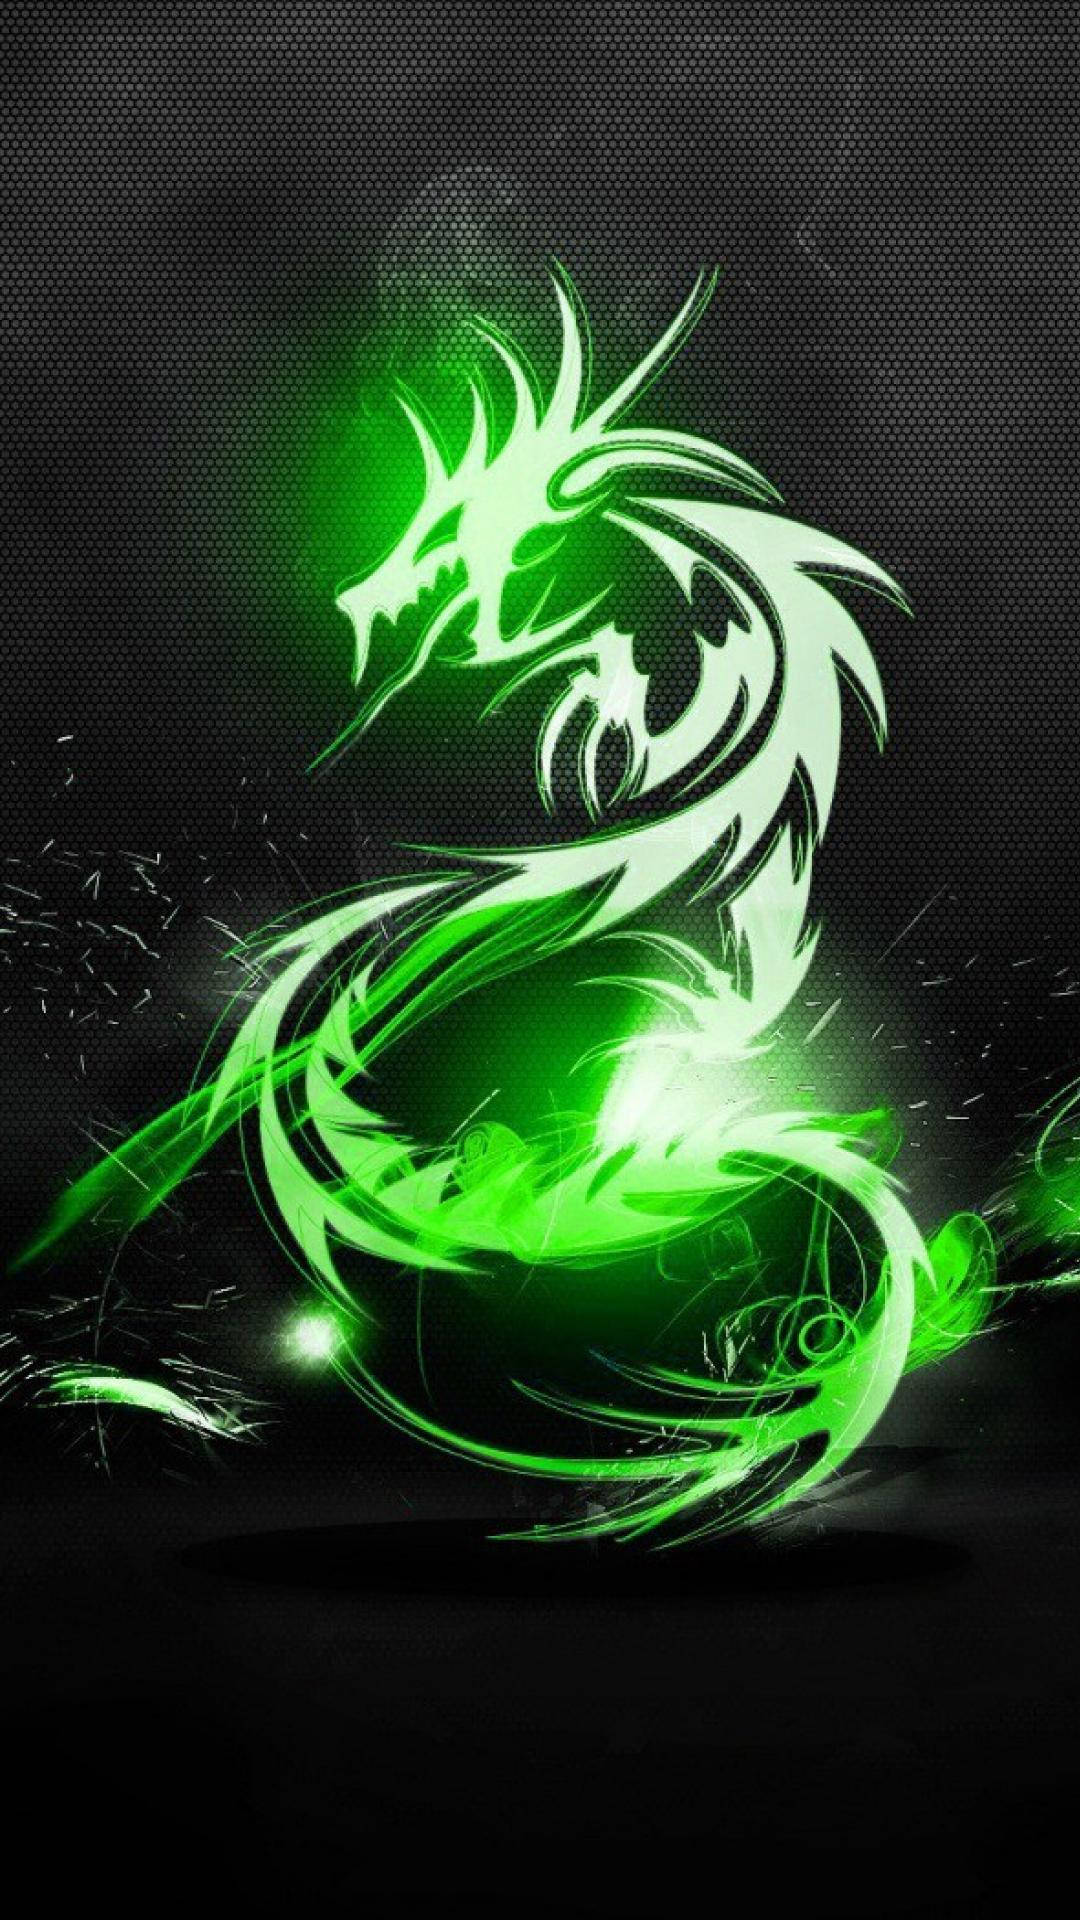 Green Dragon Wallpaper Full HD, 4K Free to Use